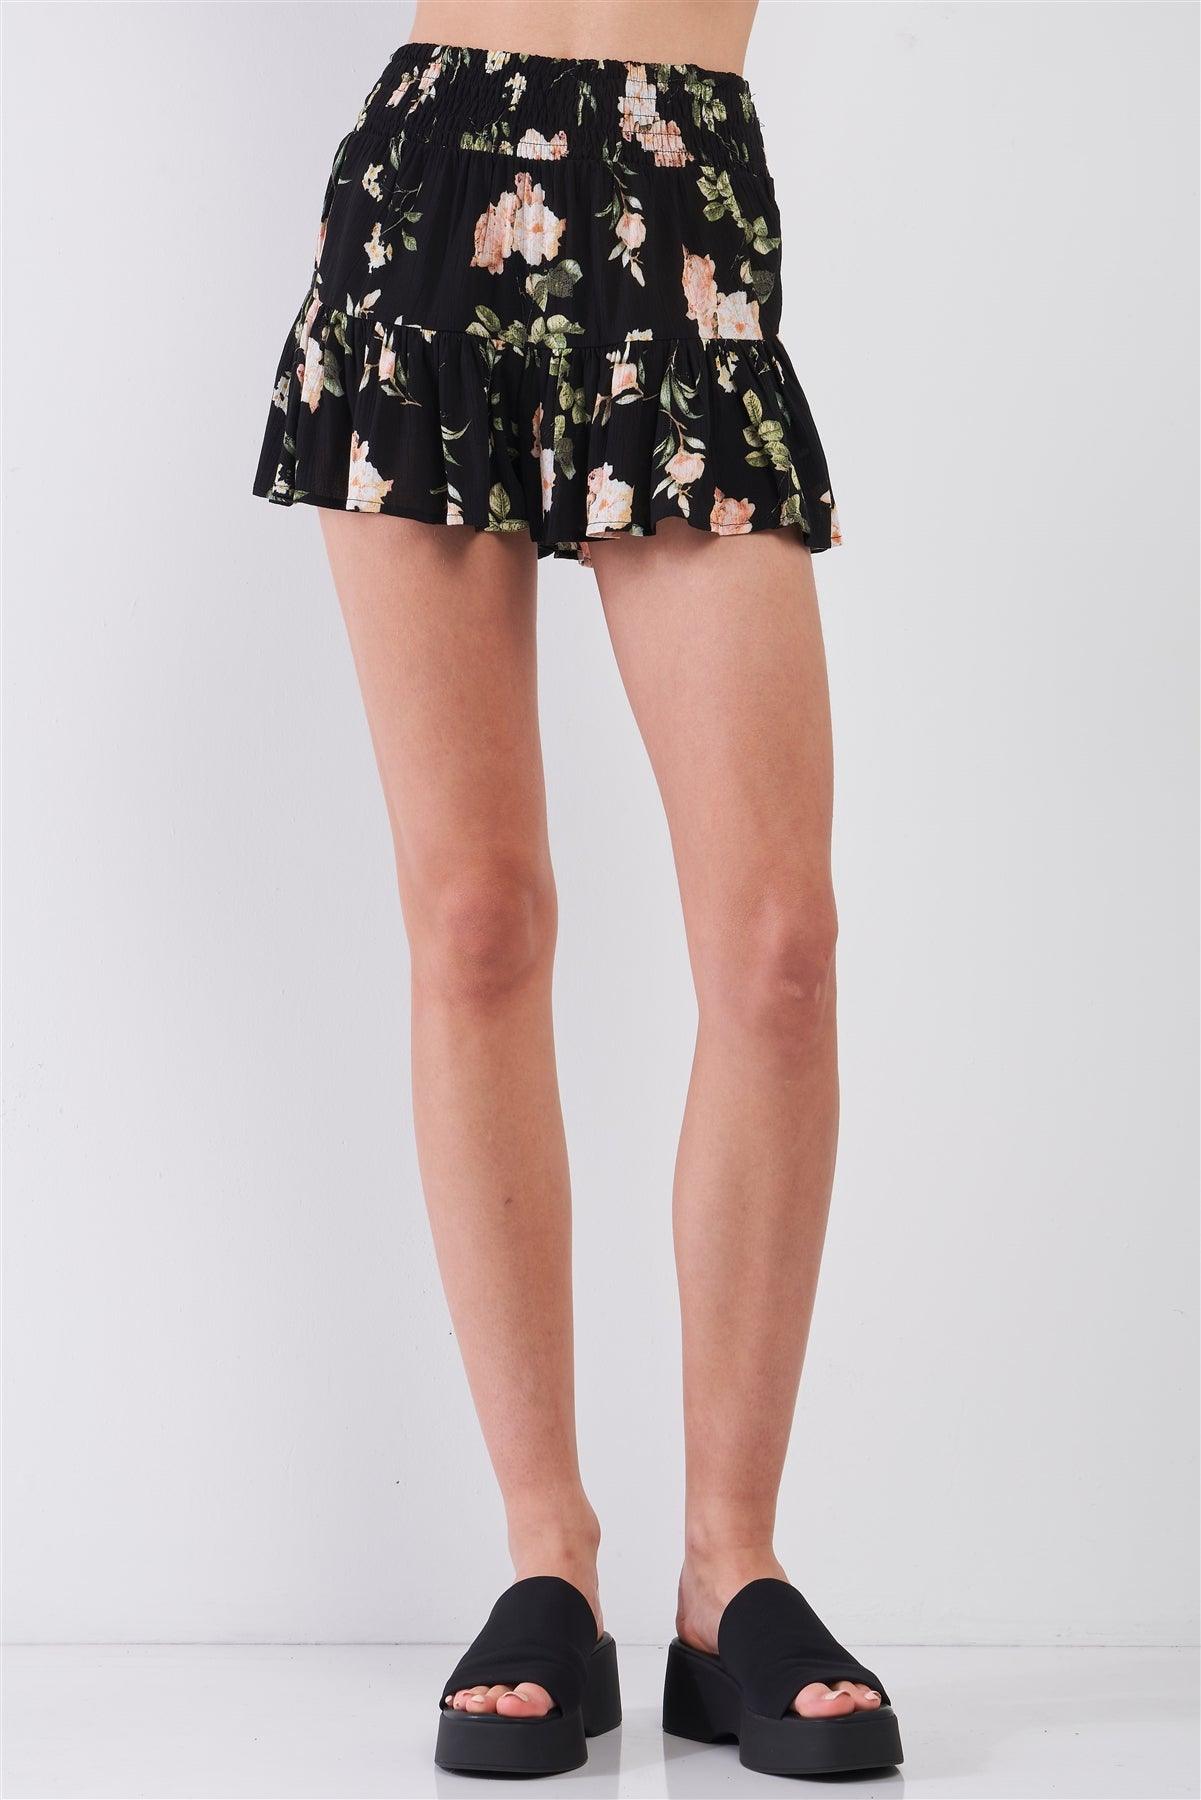 Black & Multi Floral Print High-Waisted Smock Wide Leg Shorts /1-2-2-1